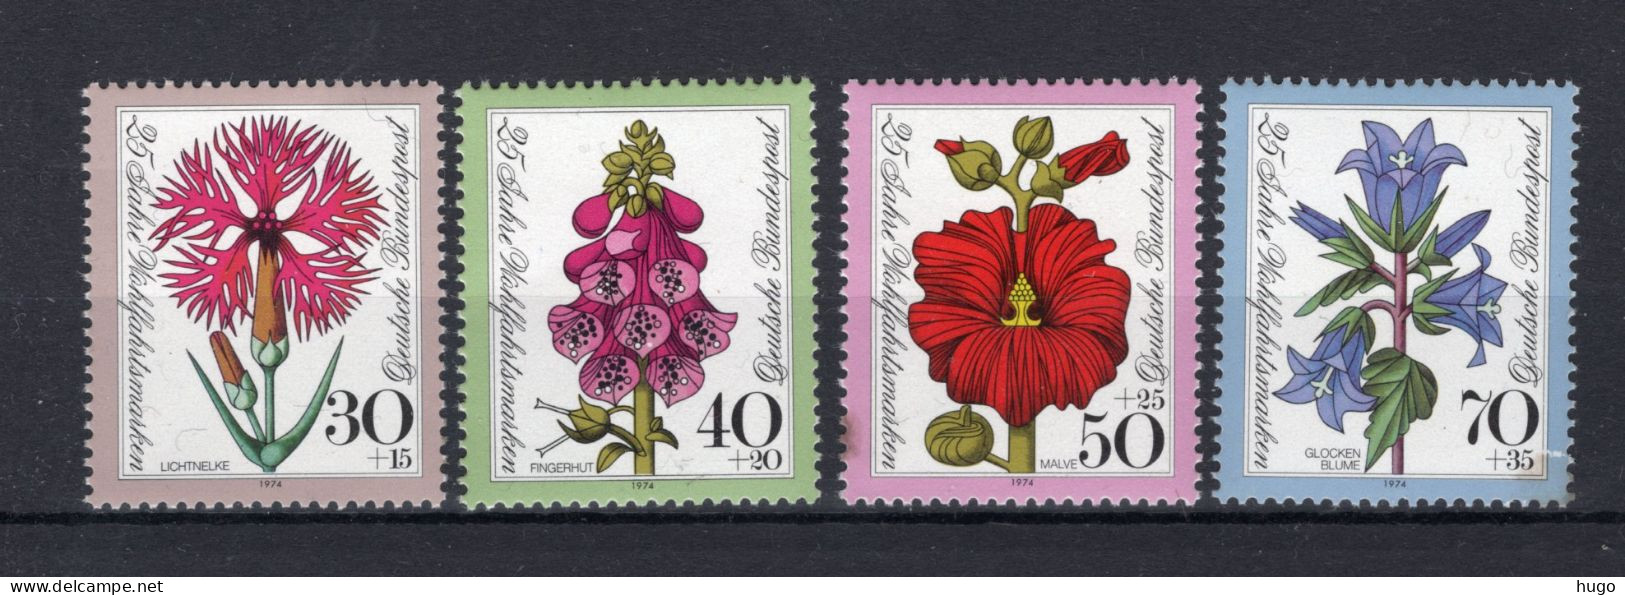 DUITSLAND Yt. 667/670 MH 1974 - Unused Stamps